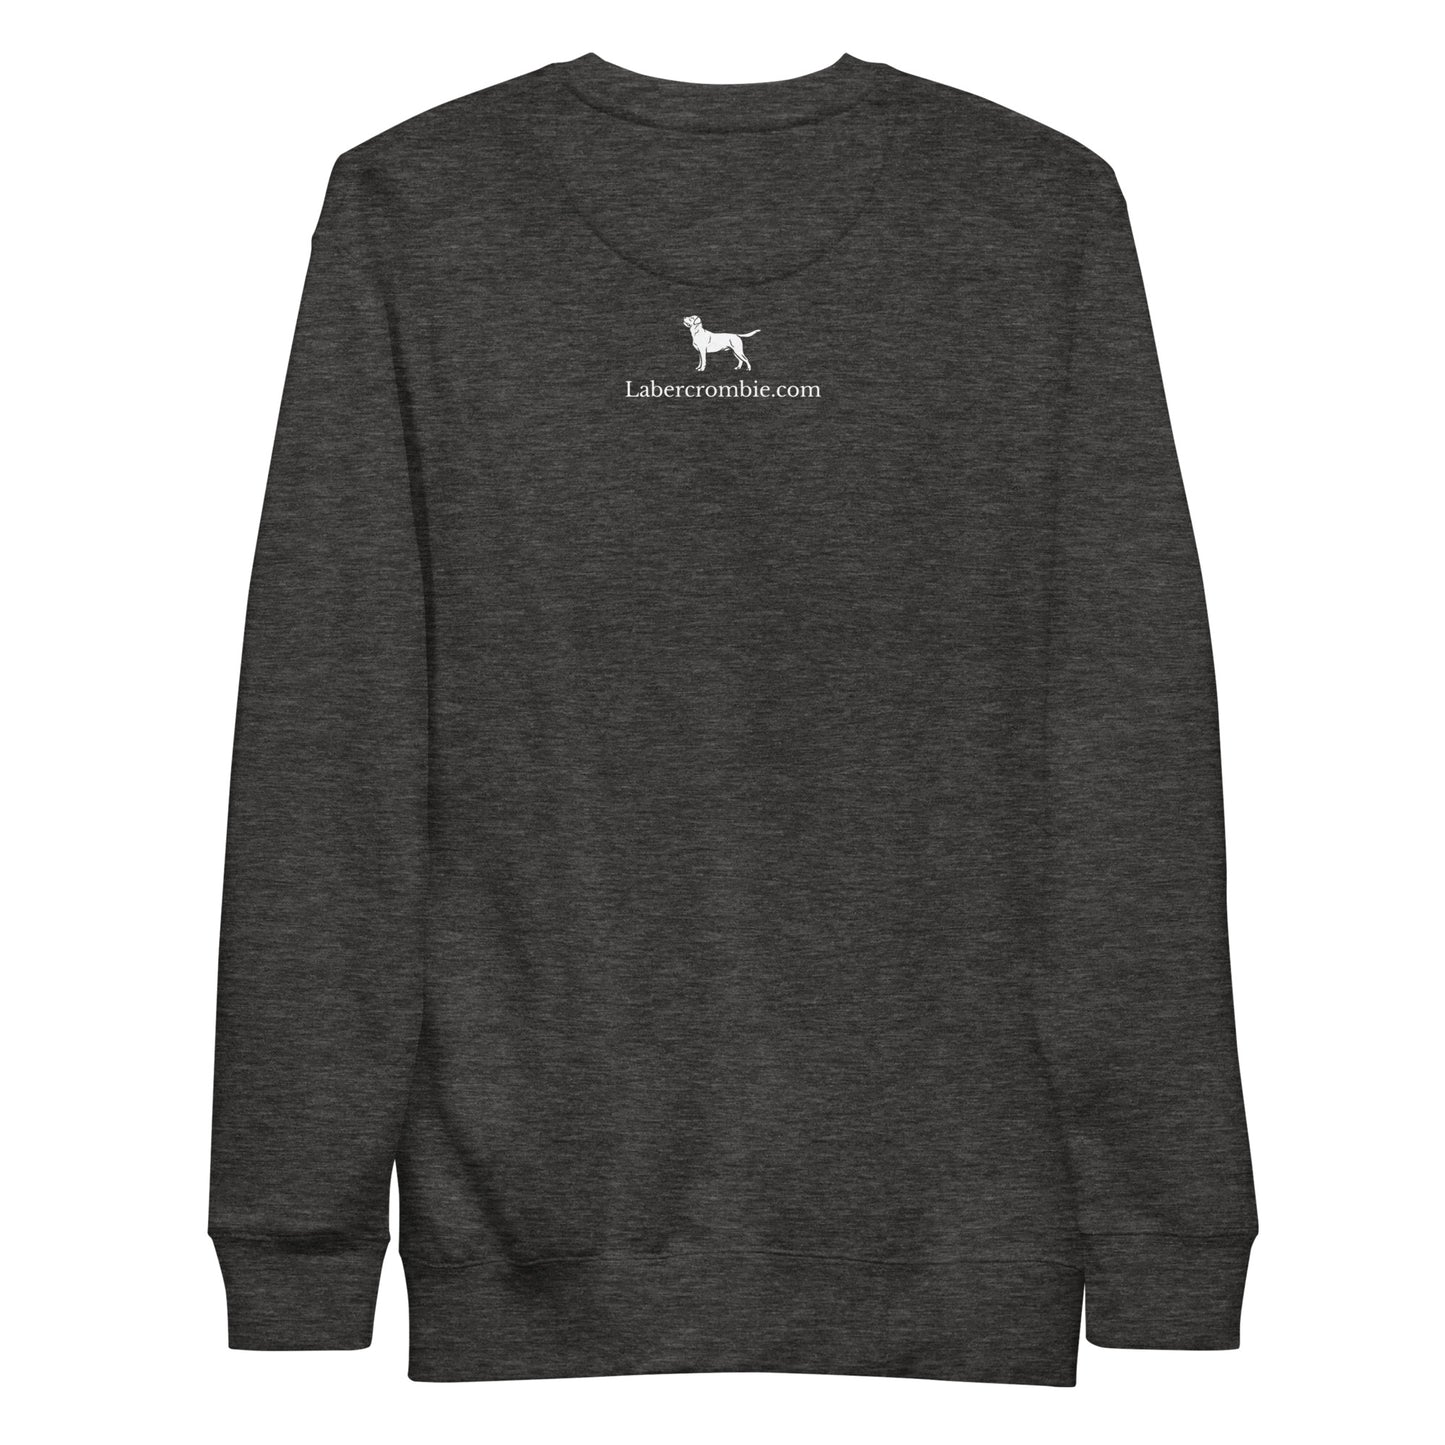 Most Likely Unisex Premium Sweatshirt